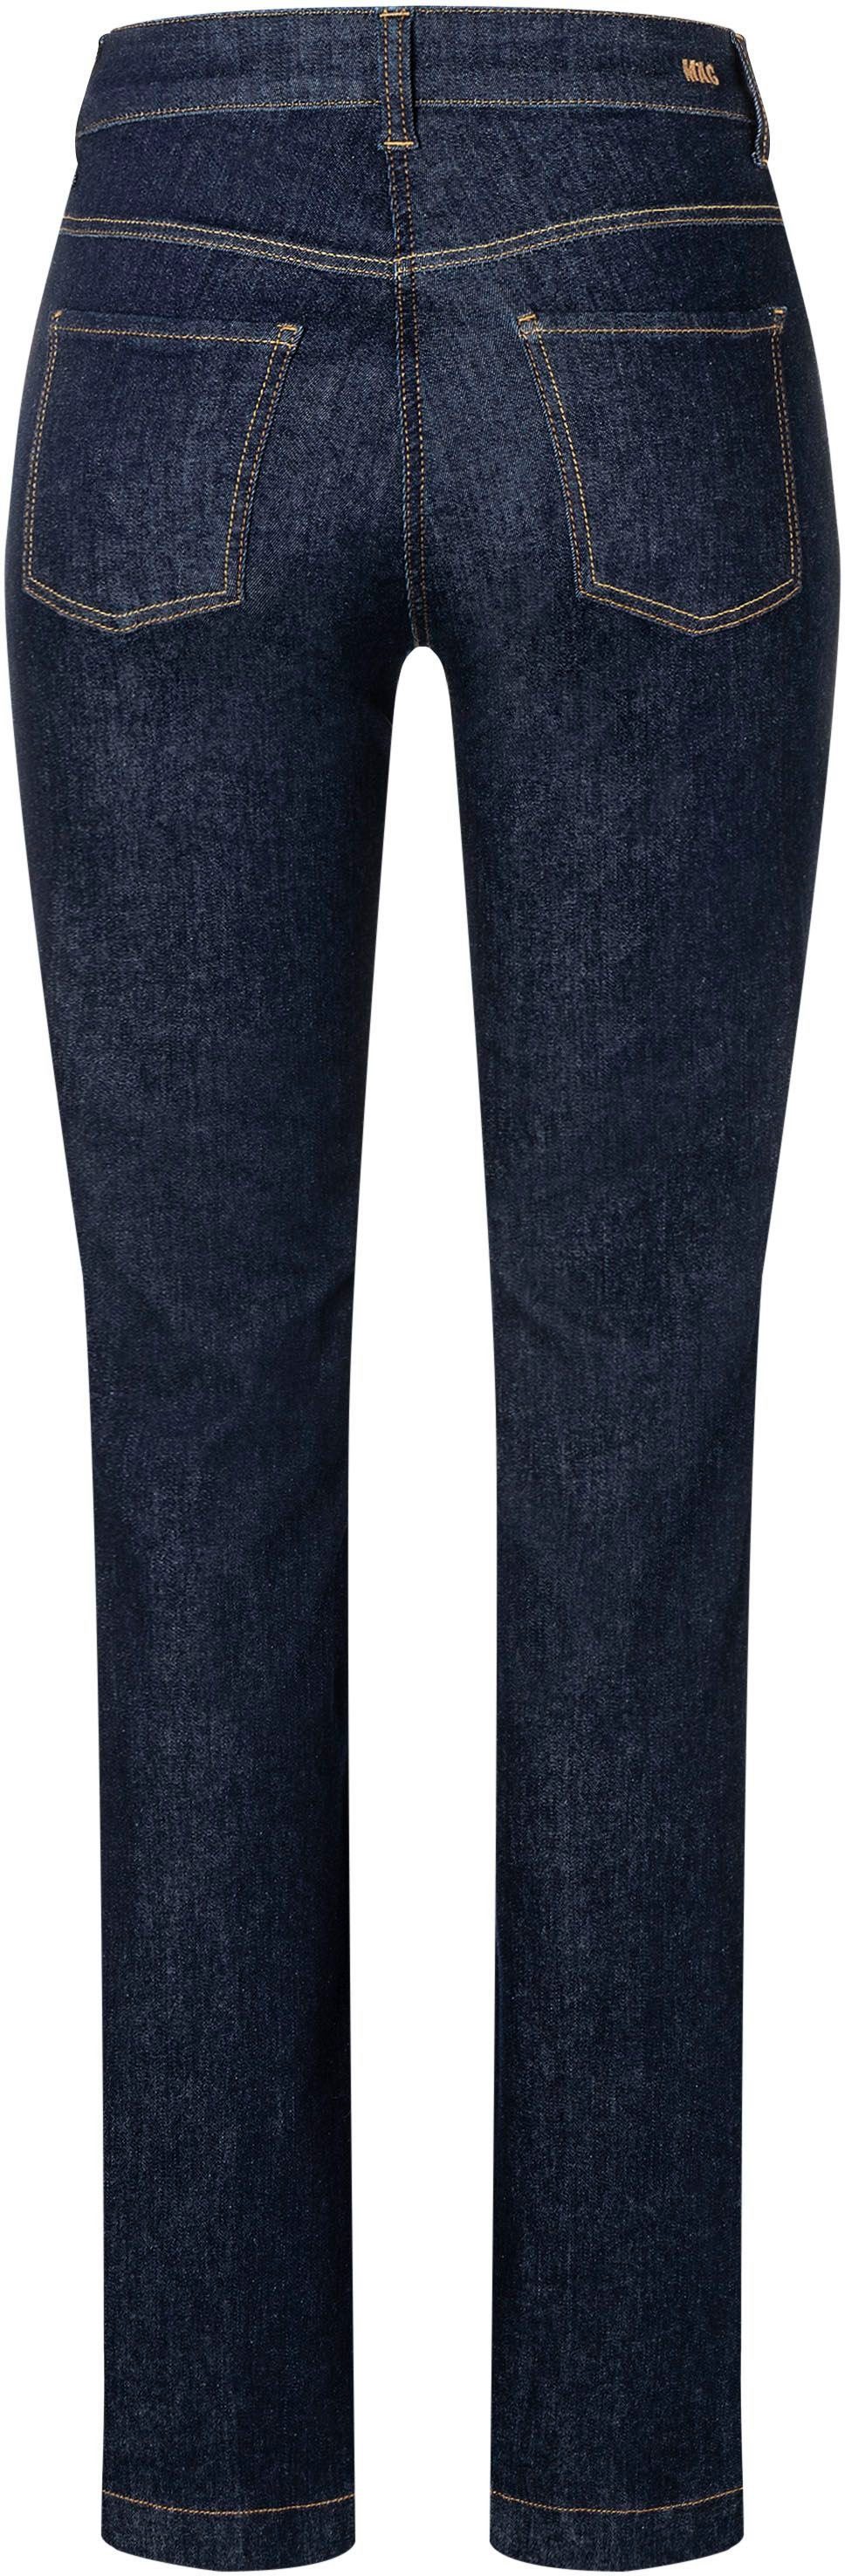 MAC High-waist-Jeans BOOT, Hoher Tragekomfort dank Baumwollqualität